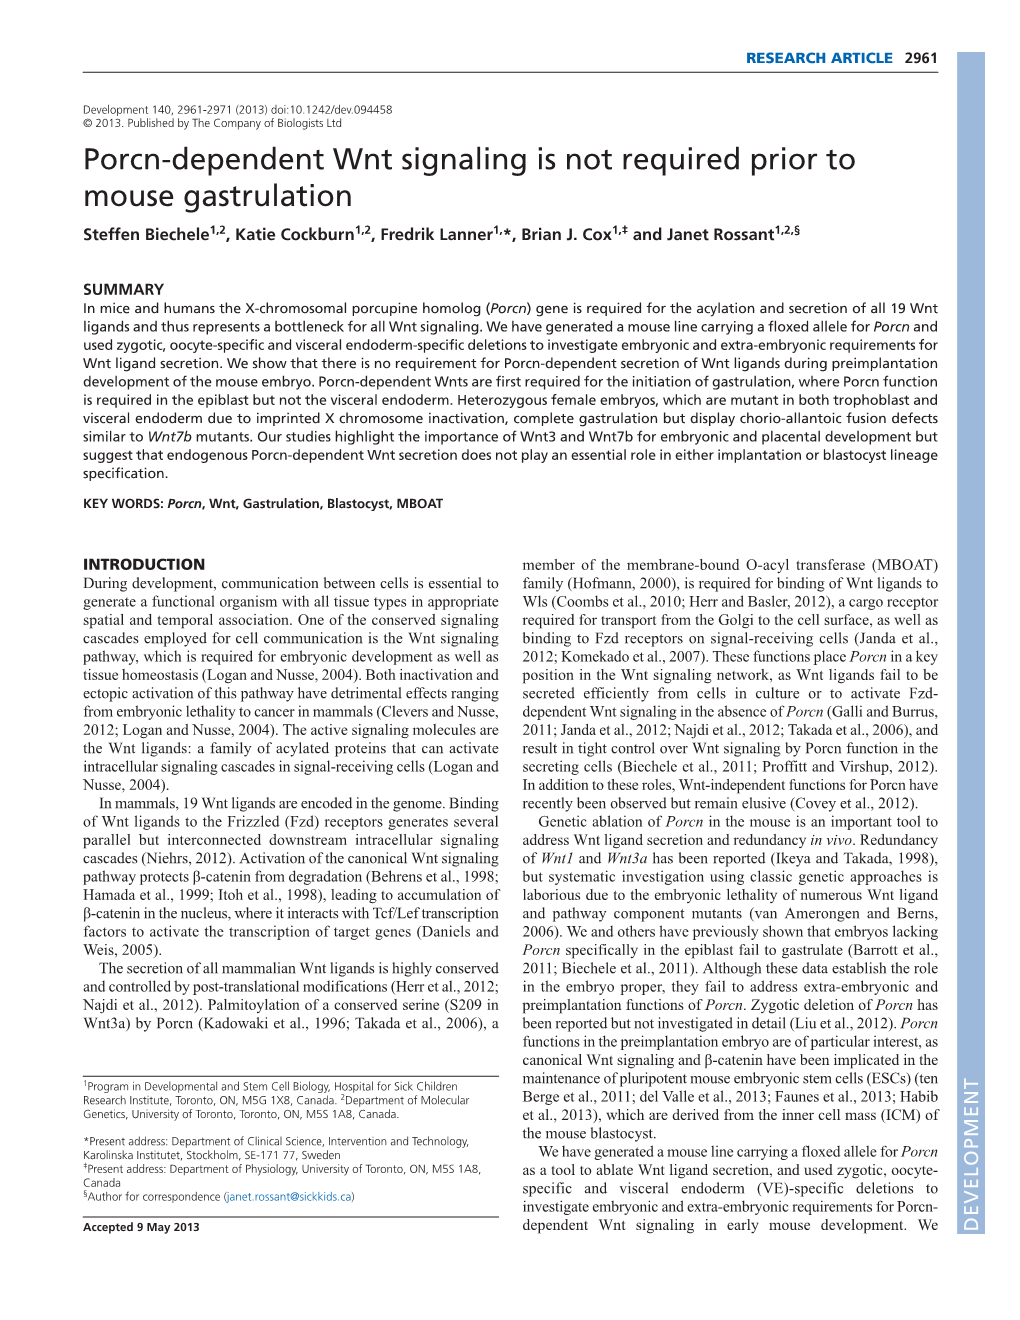 Porcn-Dependent Wnt Signaling Is Not Required Prior to Mouse Gastrulation Steffen Biechele1,2, Katie Cockburn1,2, Fredrik Lanner1,*, Brian J